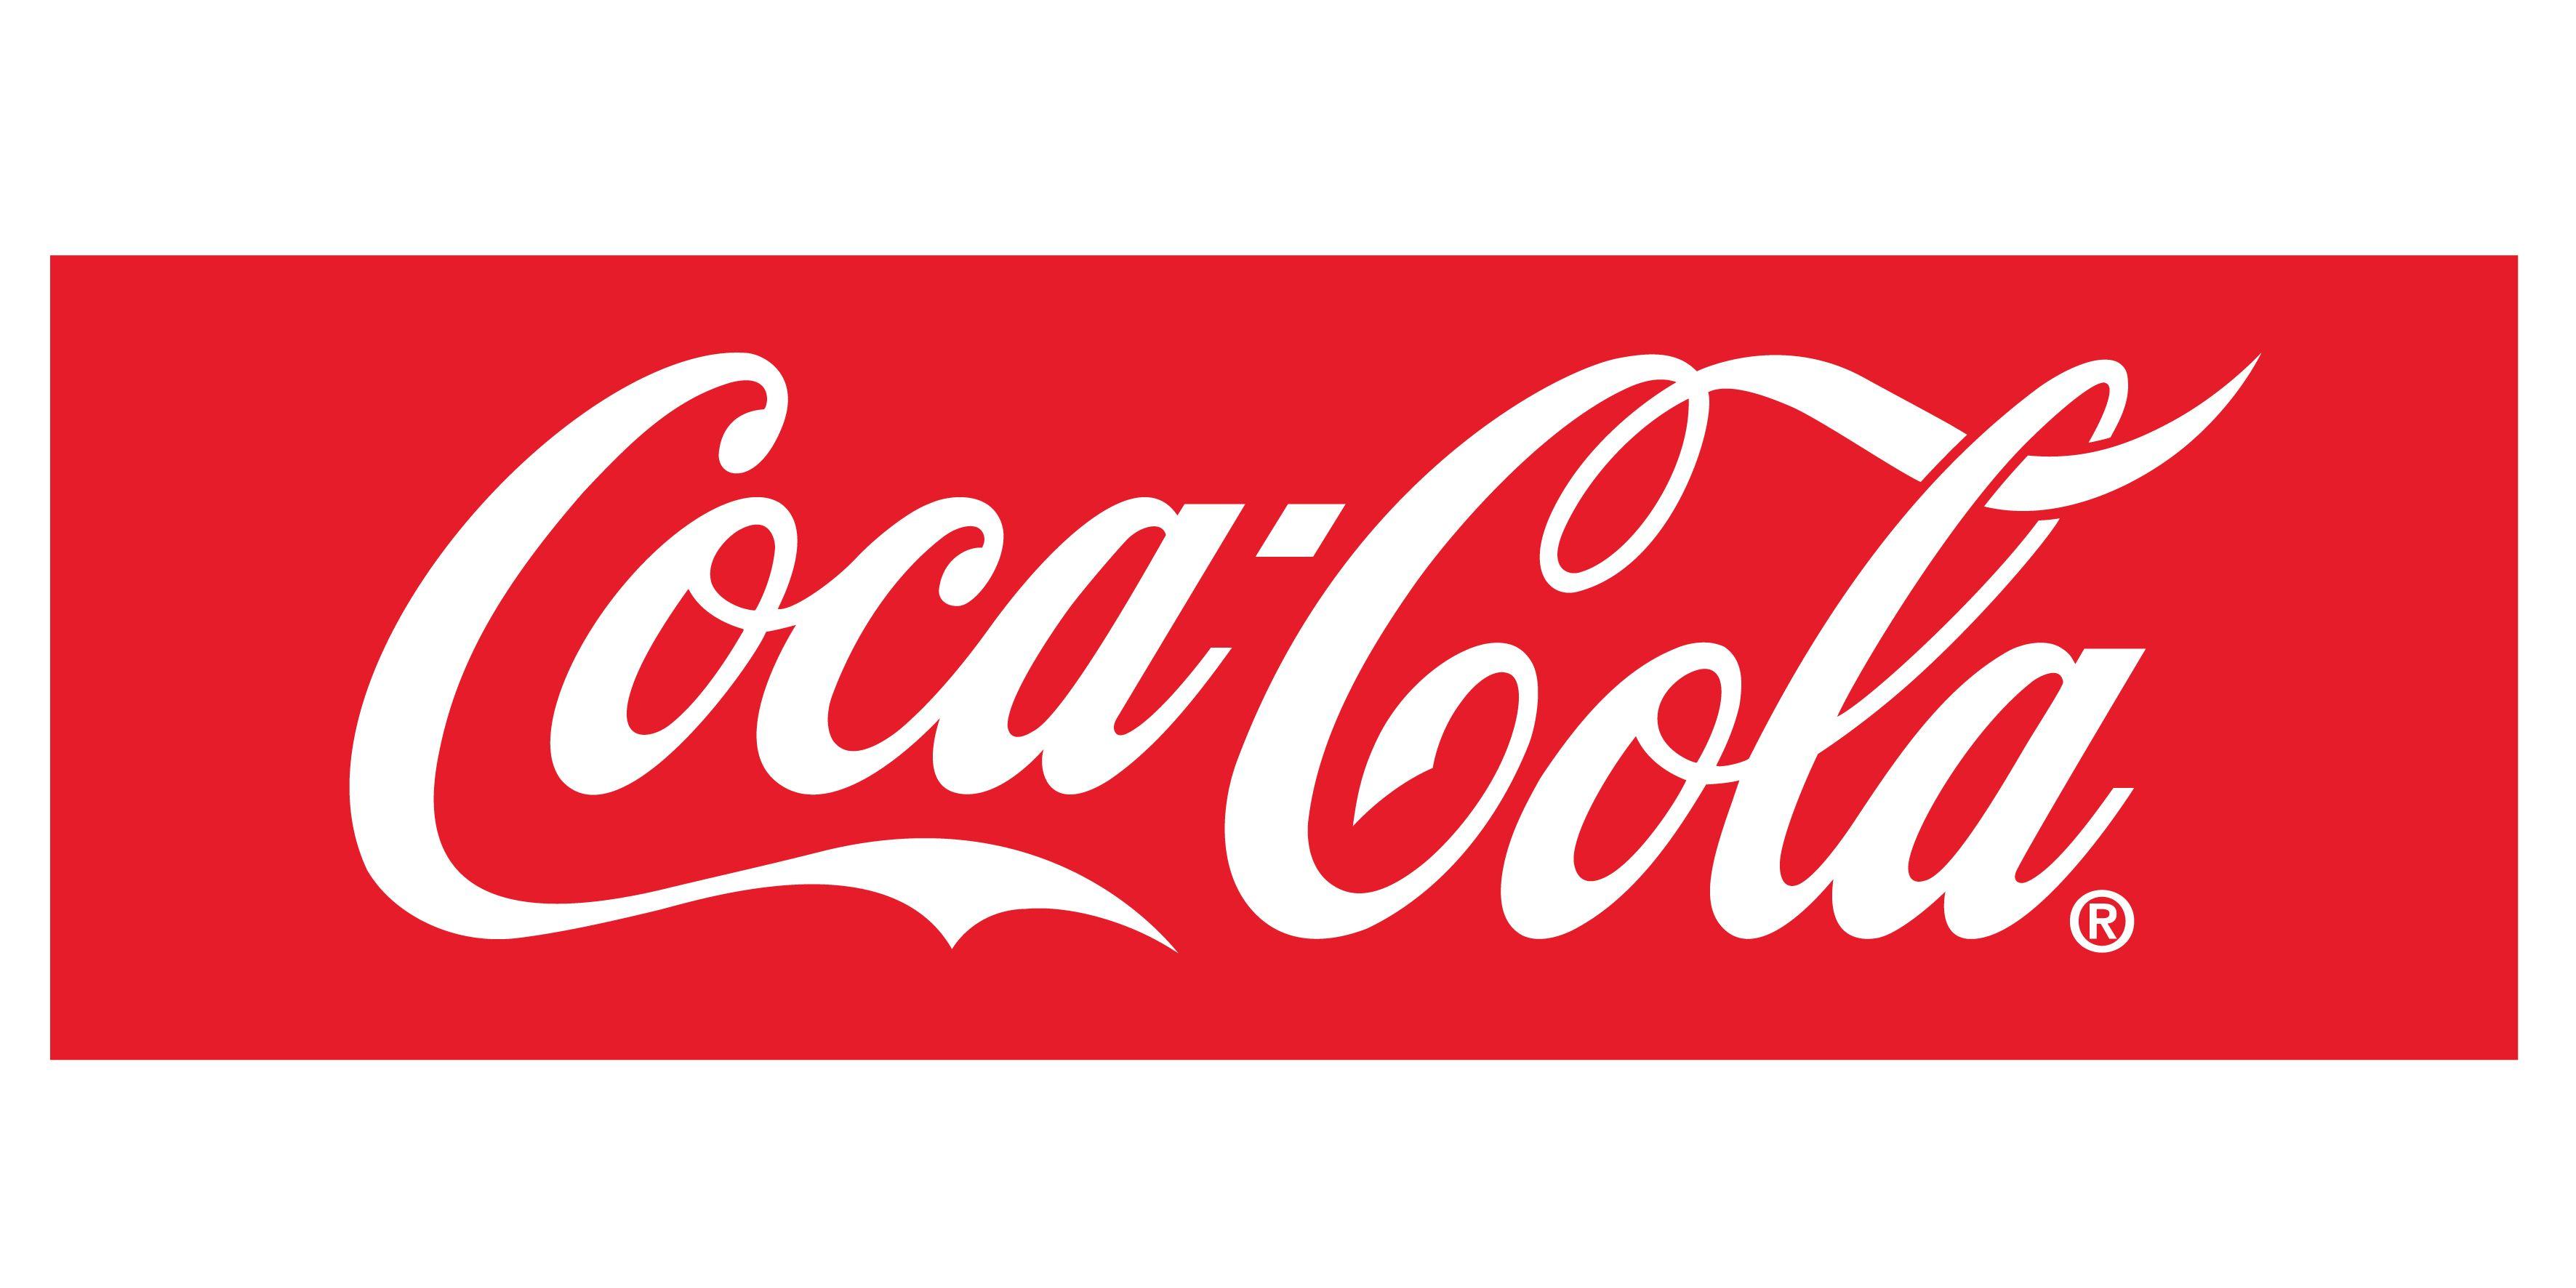 Cocaola Logo - 946692-coca-cola-logo - Tracy Chamber of Commerce